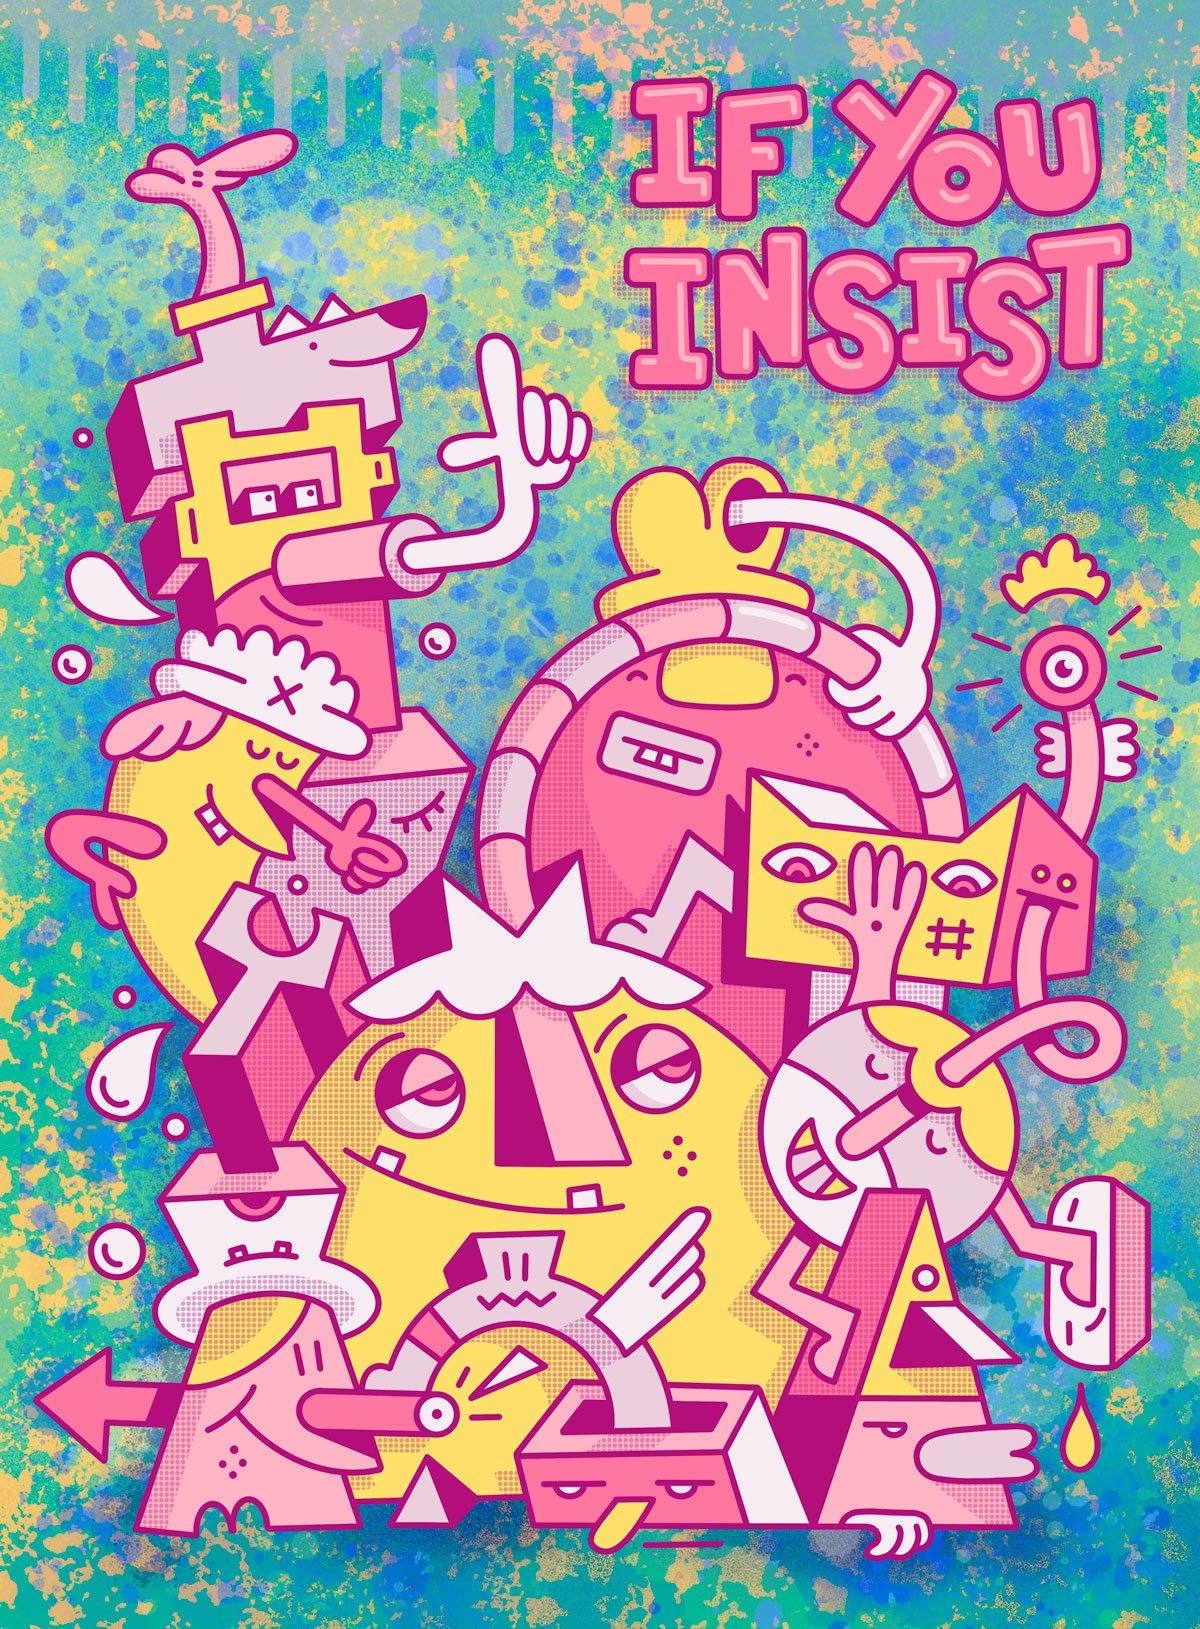 If You Insist - Mister Phil Illustration